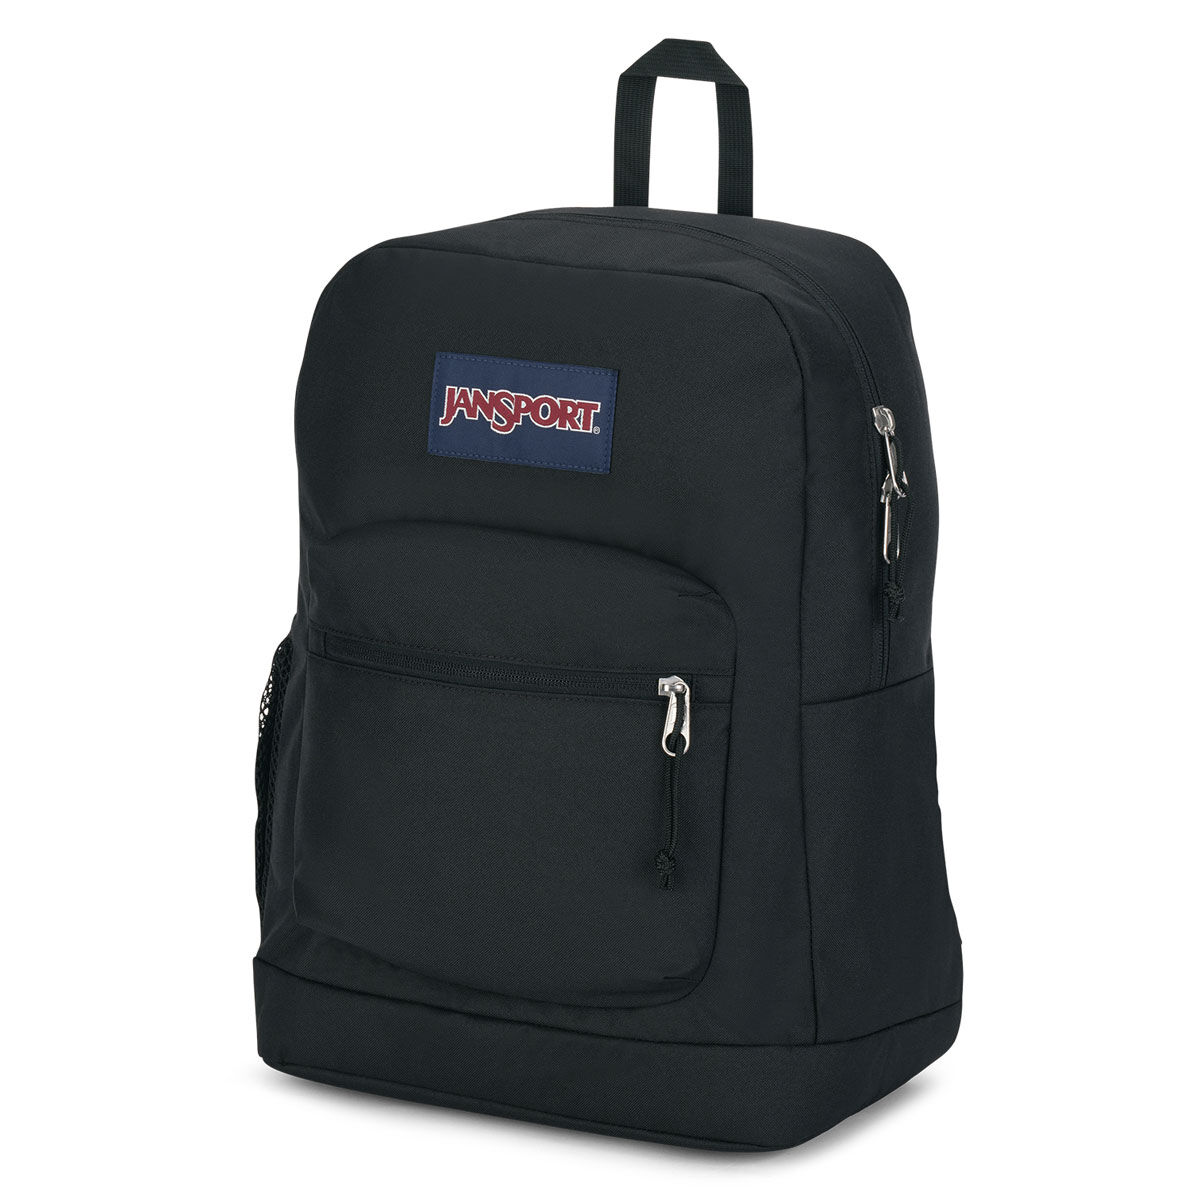 JanSport Cross Town Plus Backpack, , rebel_hi-res